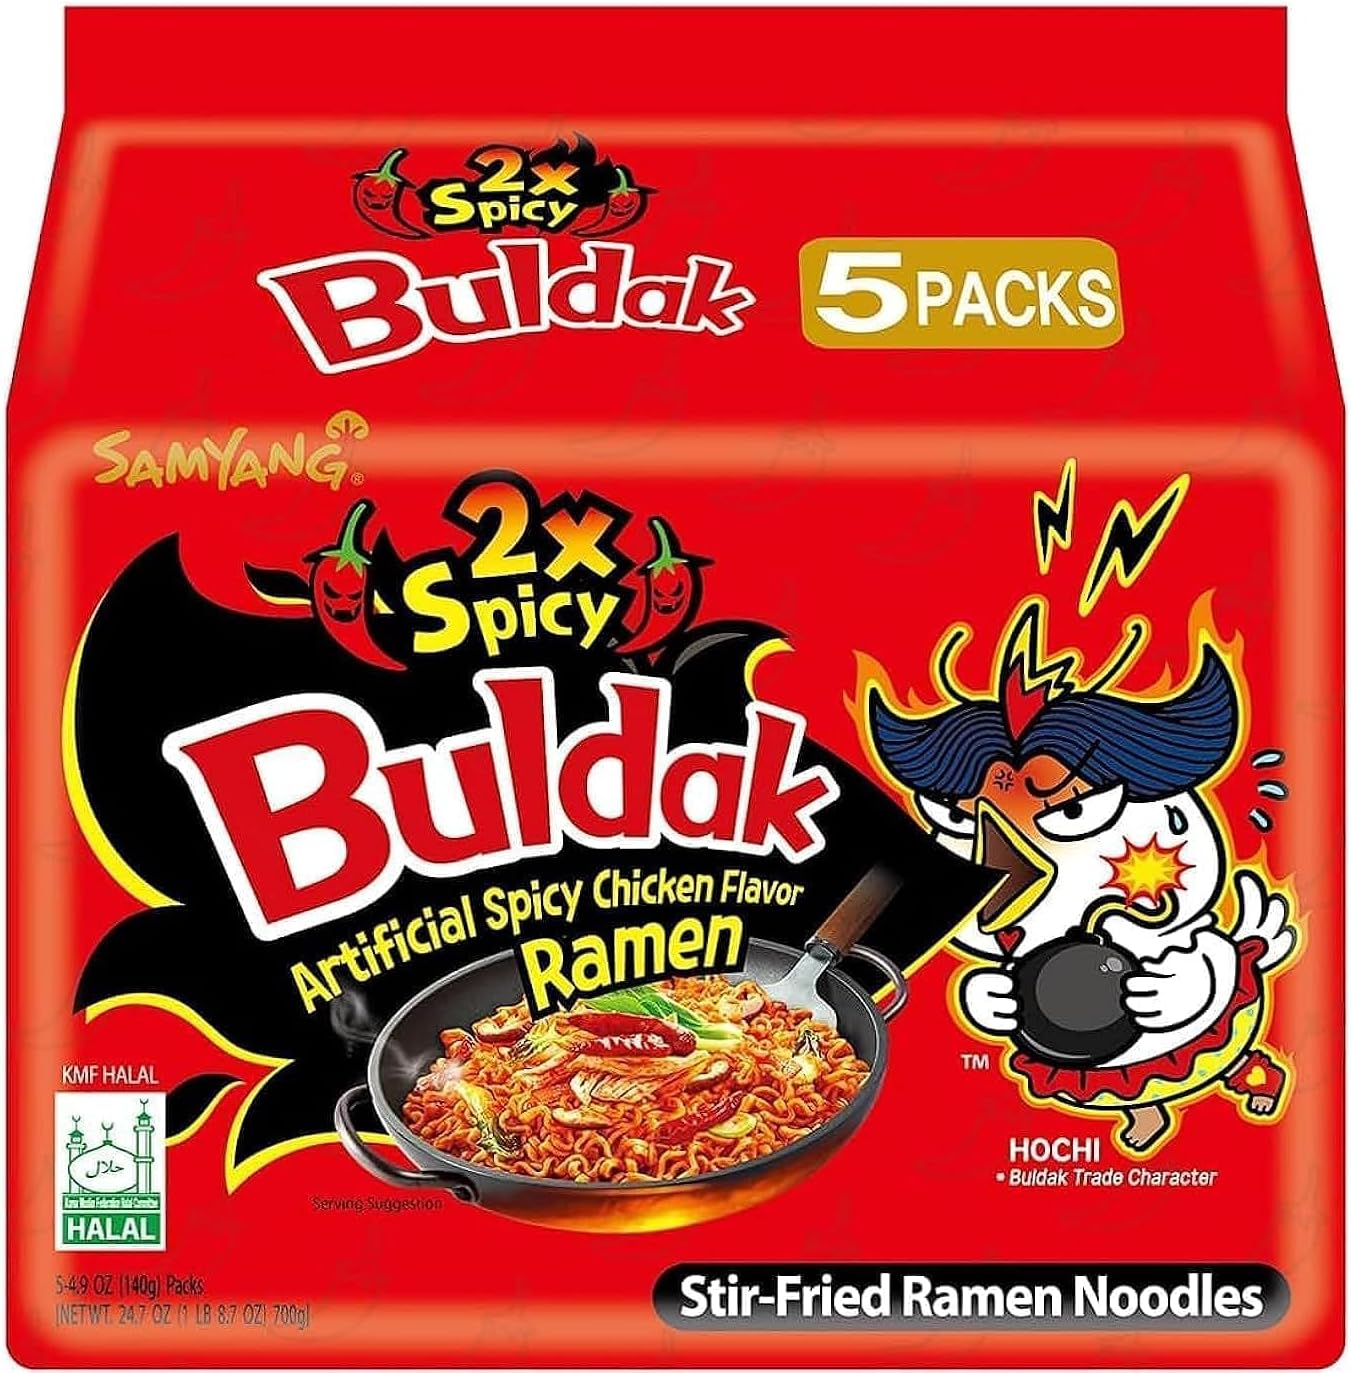 Samyang Buldak 2x Spicy Hot Chicken Flavour Ramen Noodles (145g) (5 Pack)